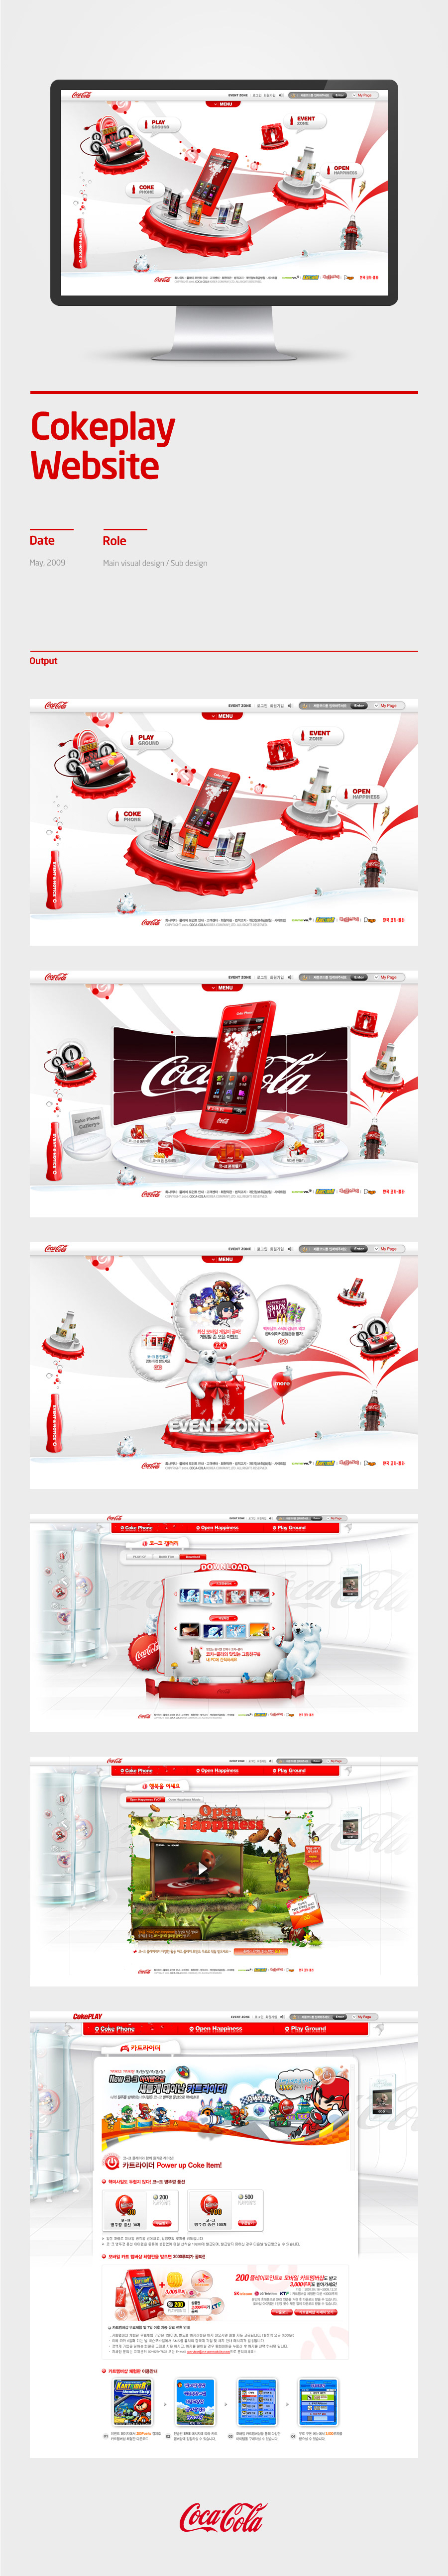 Cokeplay web site